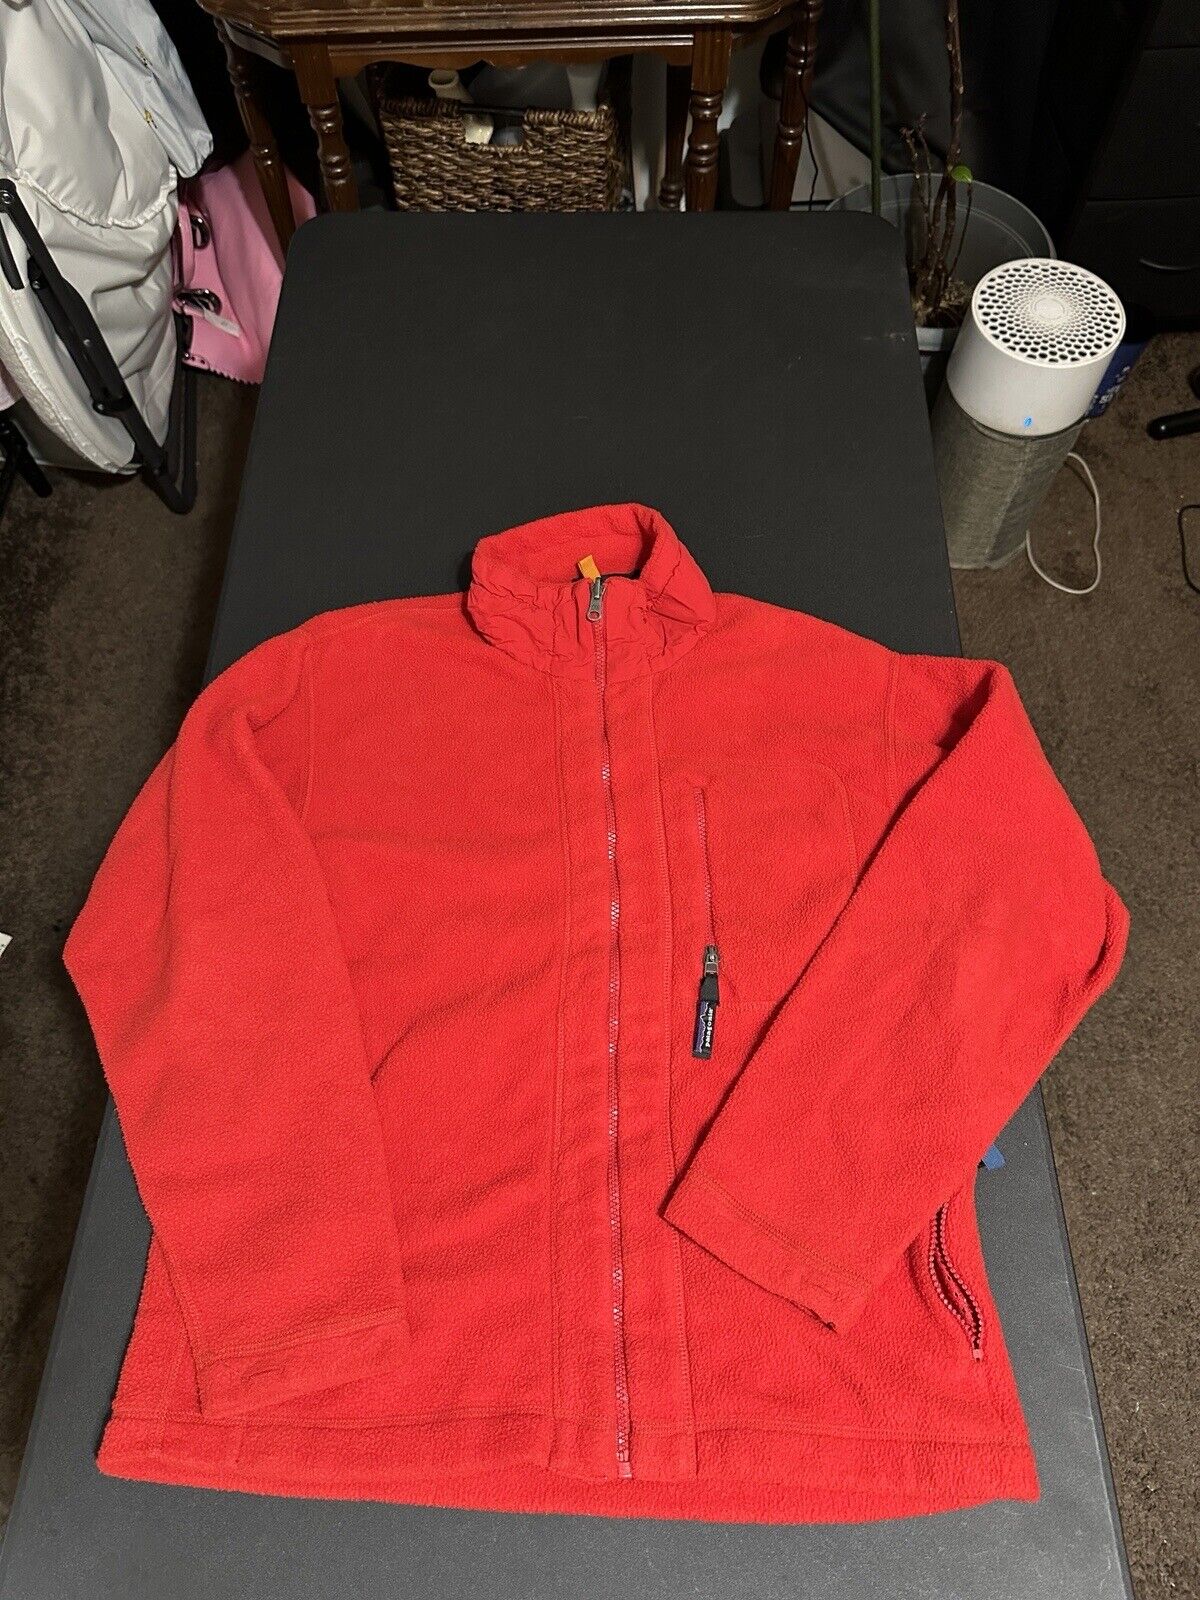 Patagonia Synchilla Jacket Mens Medium Red Full Zip Fleece Mock Neck Made in USA